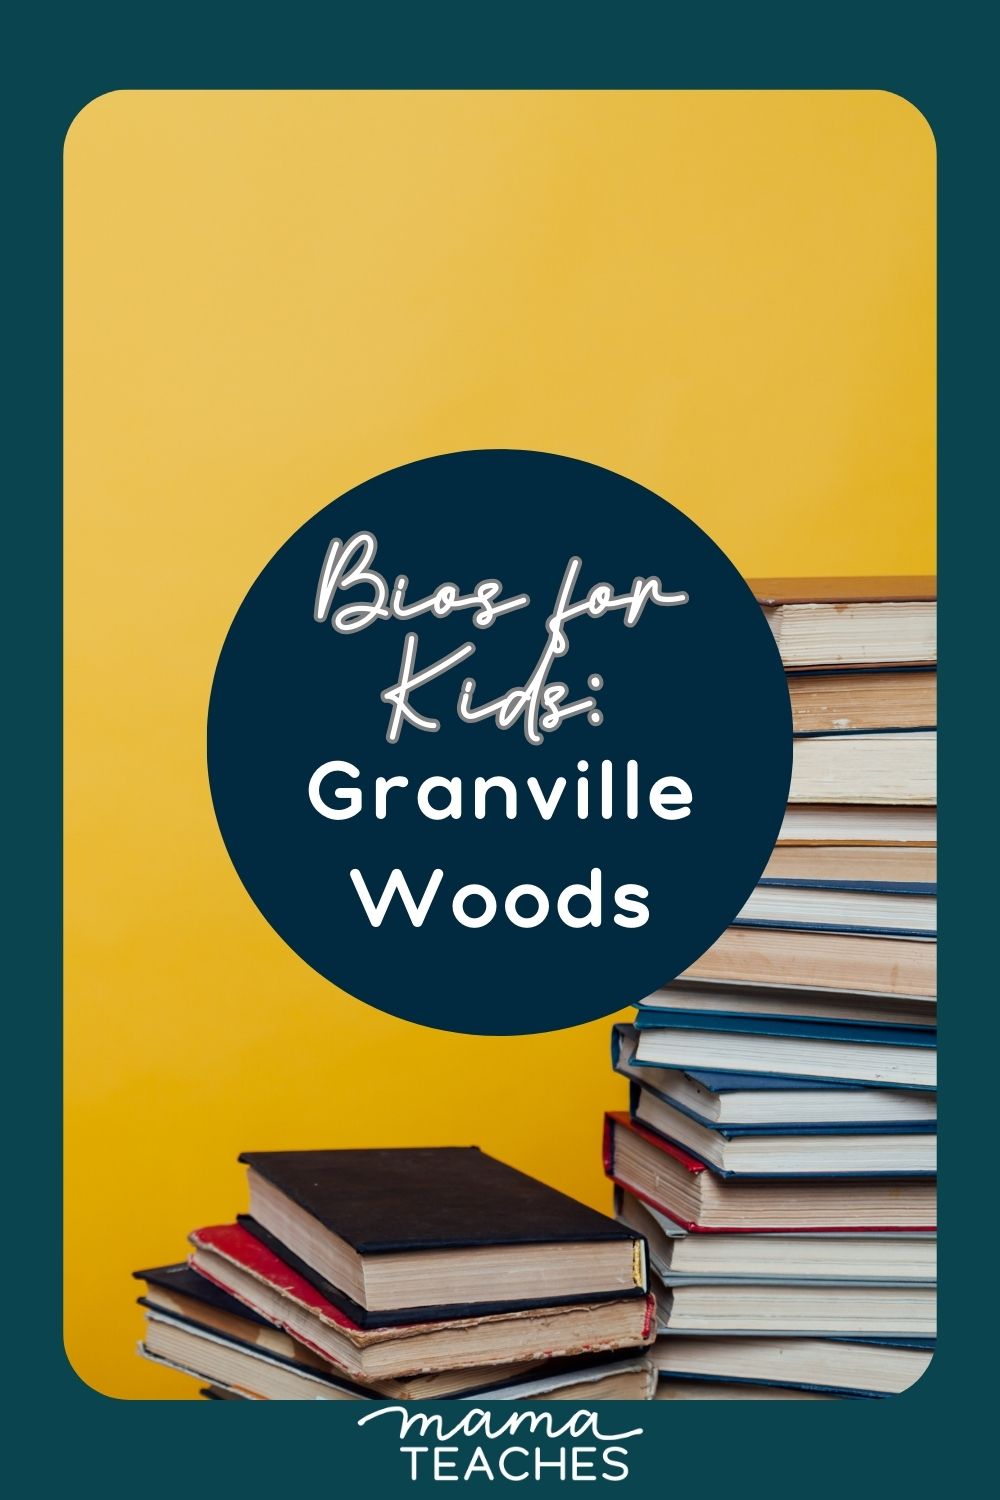 Bios for Kids Granville Woods